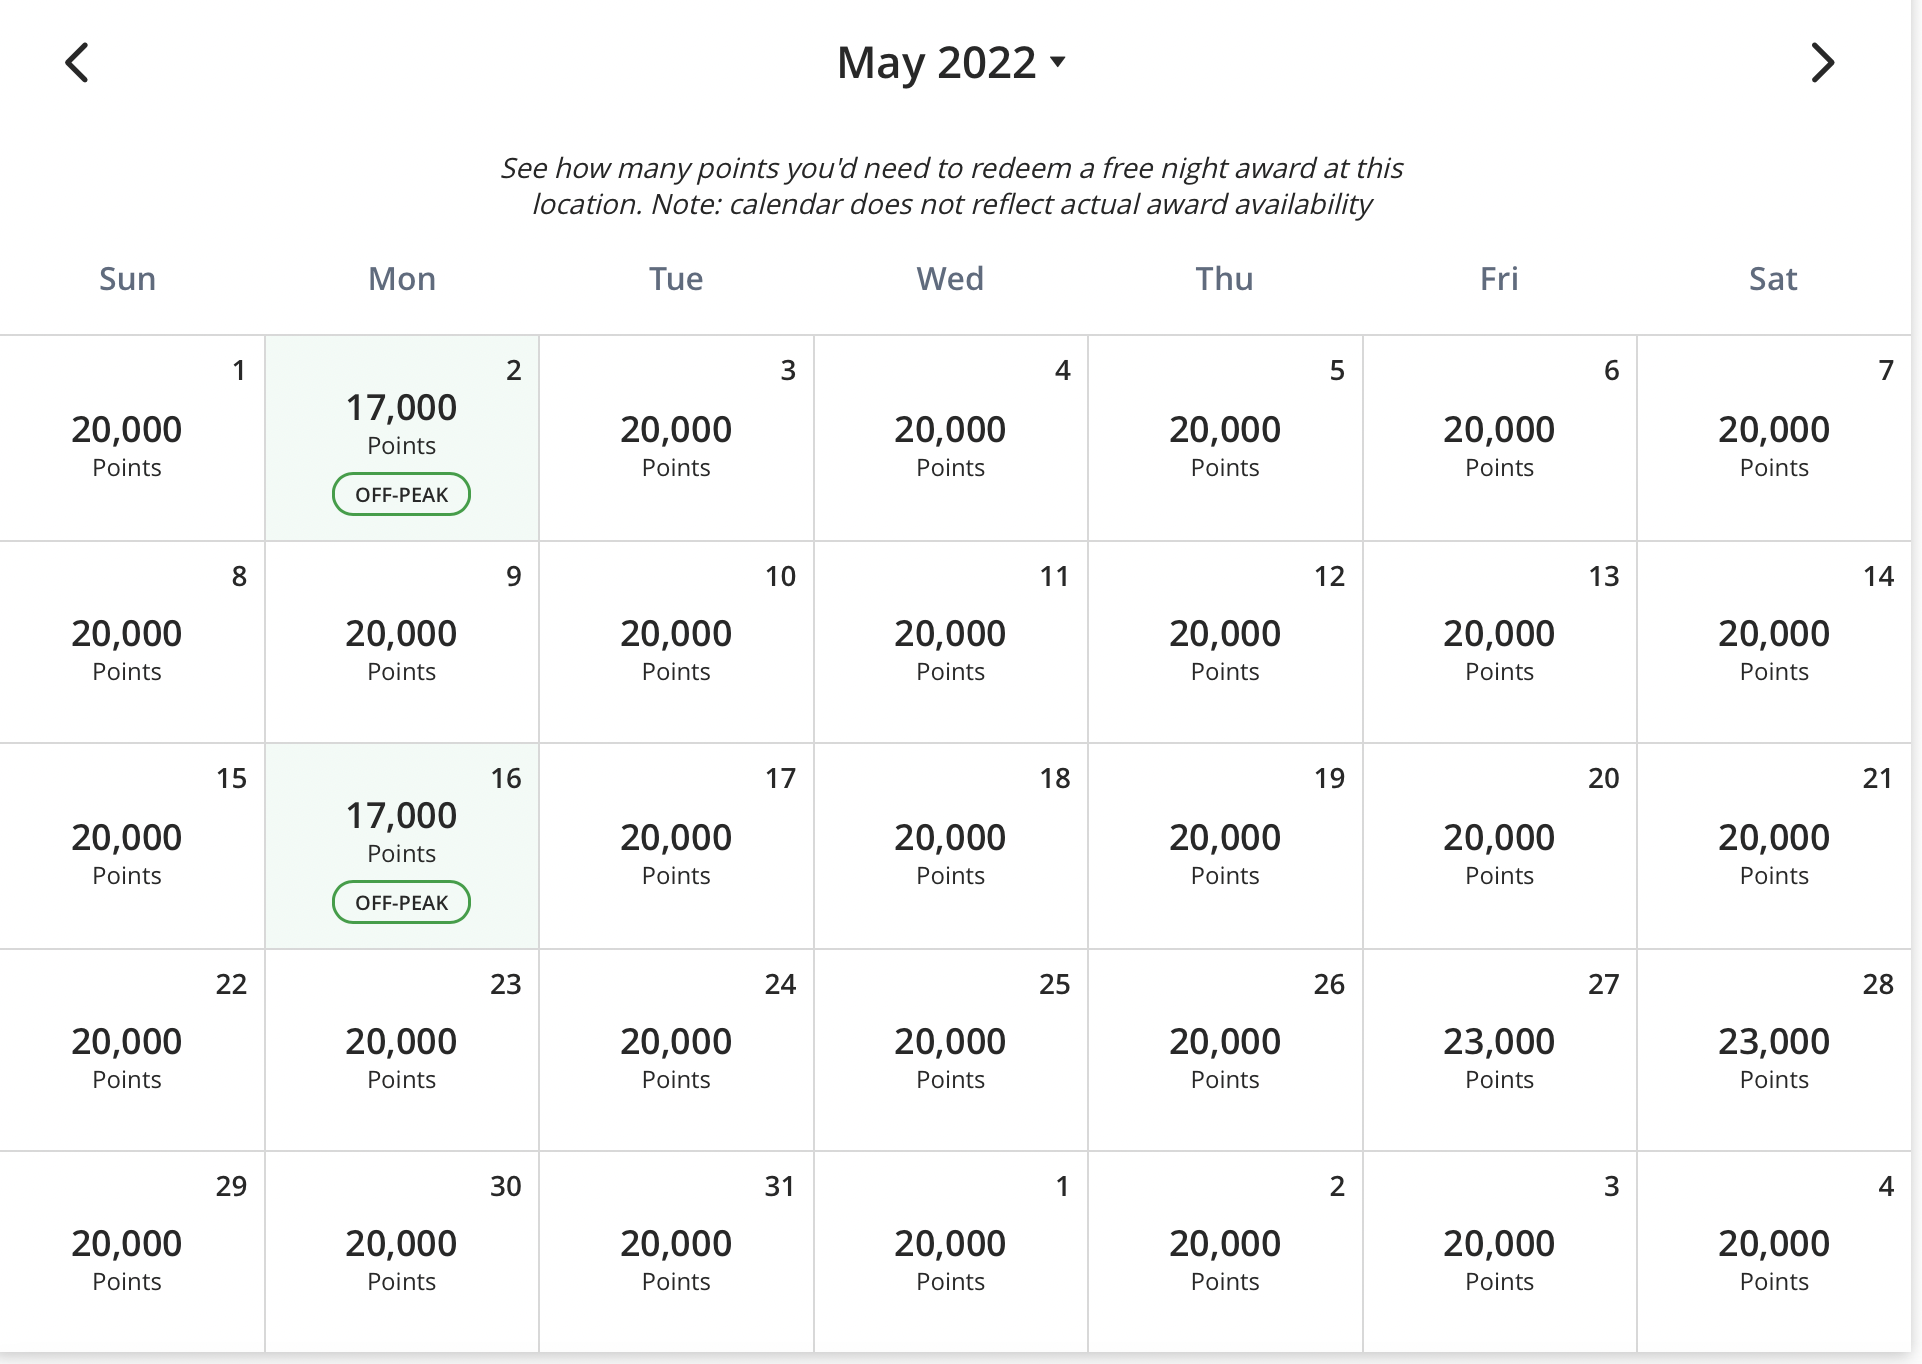 hyat peak pricing calendar